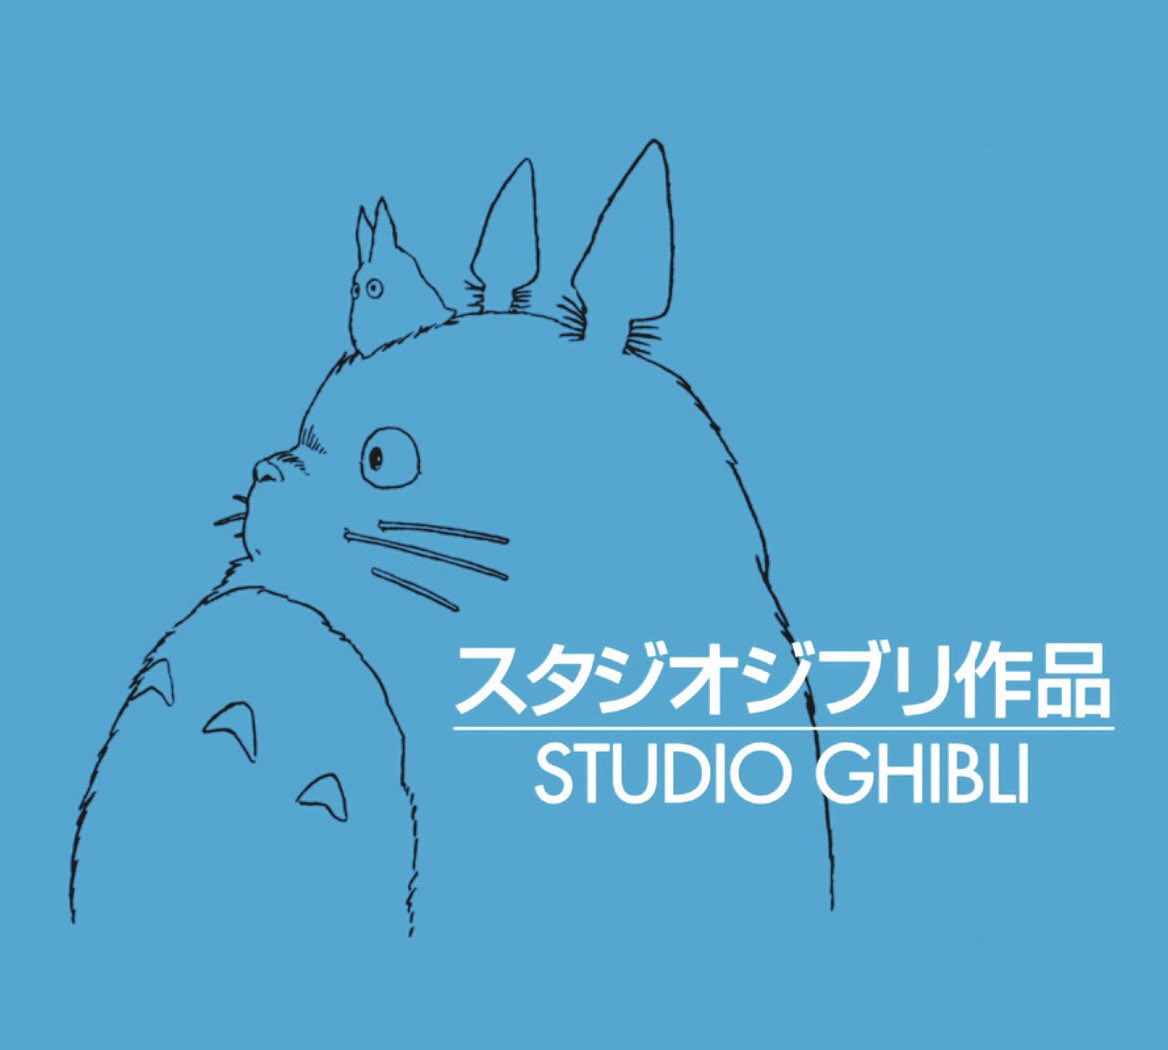 Studio Ghibli/Twitter